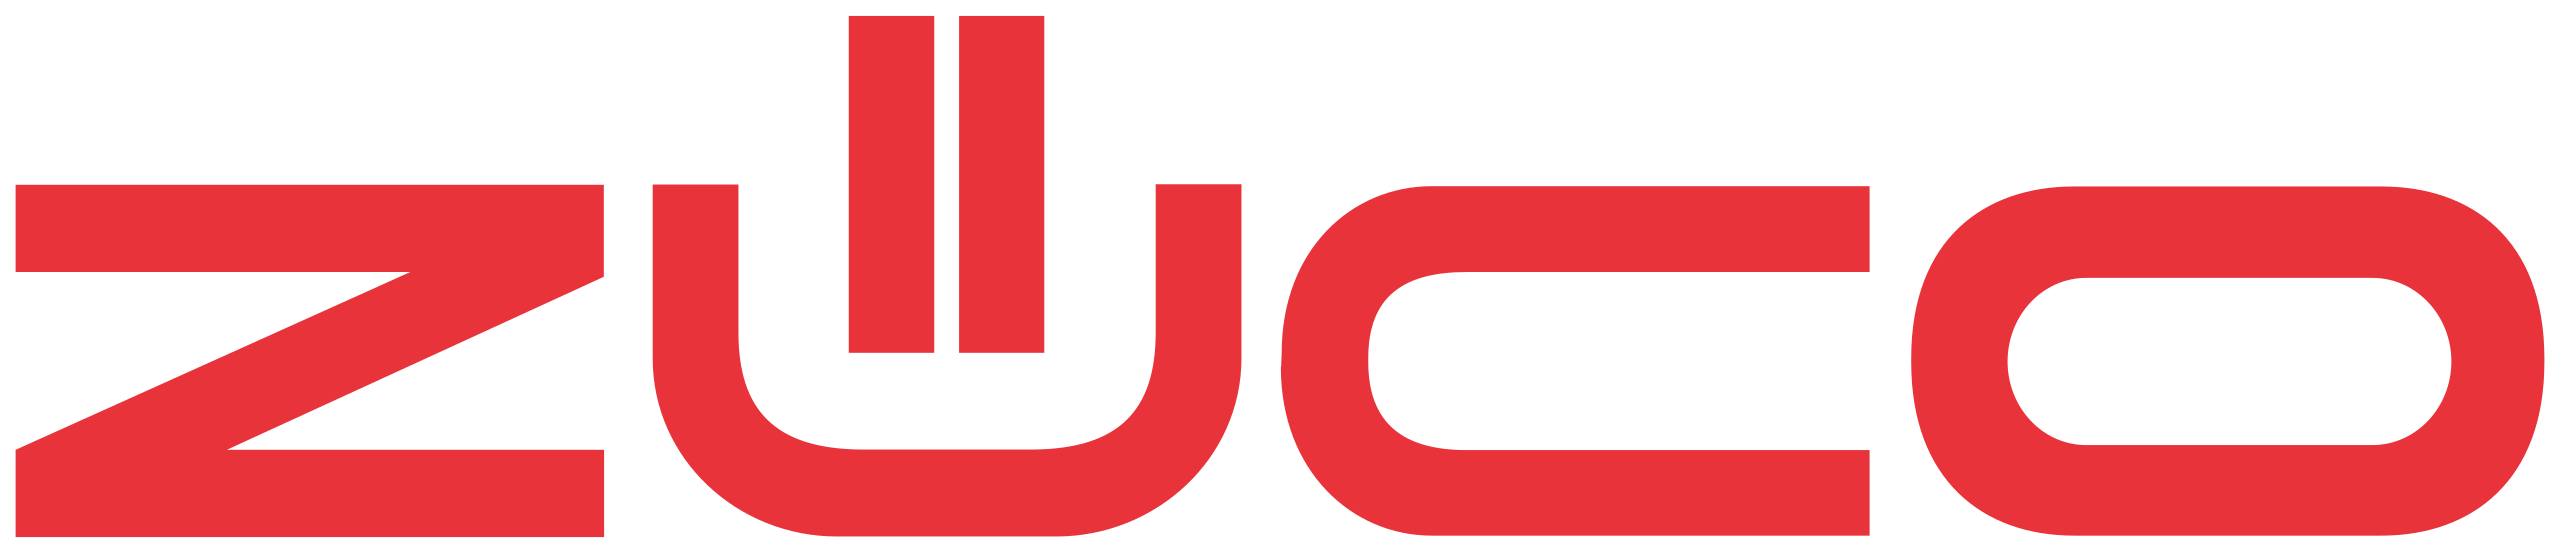 2560px-Züco_logo.svg